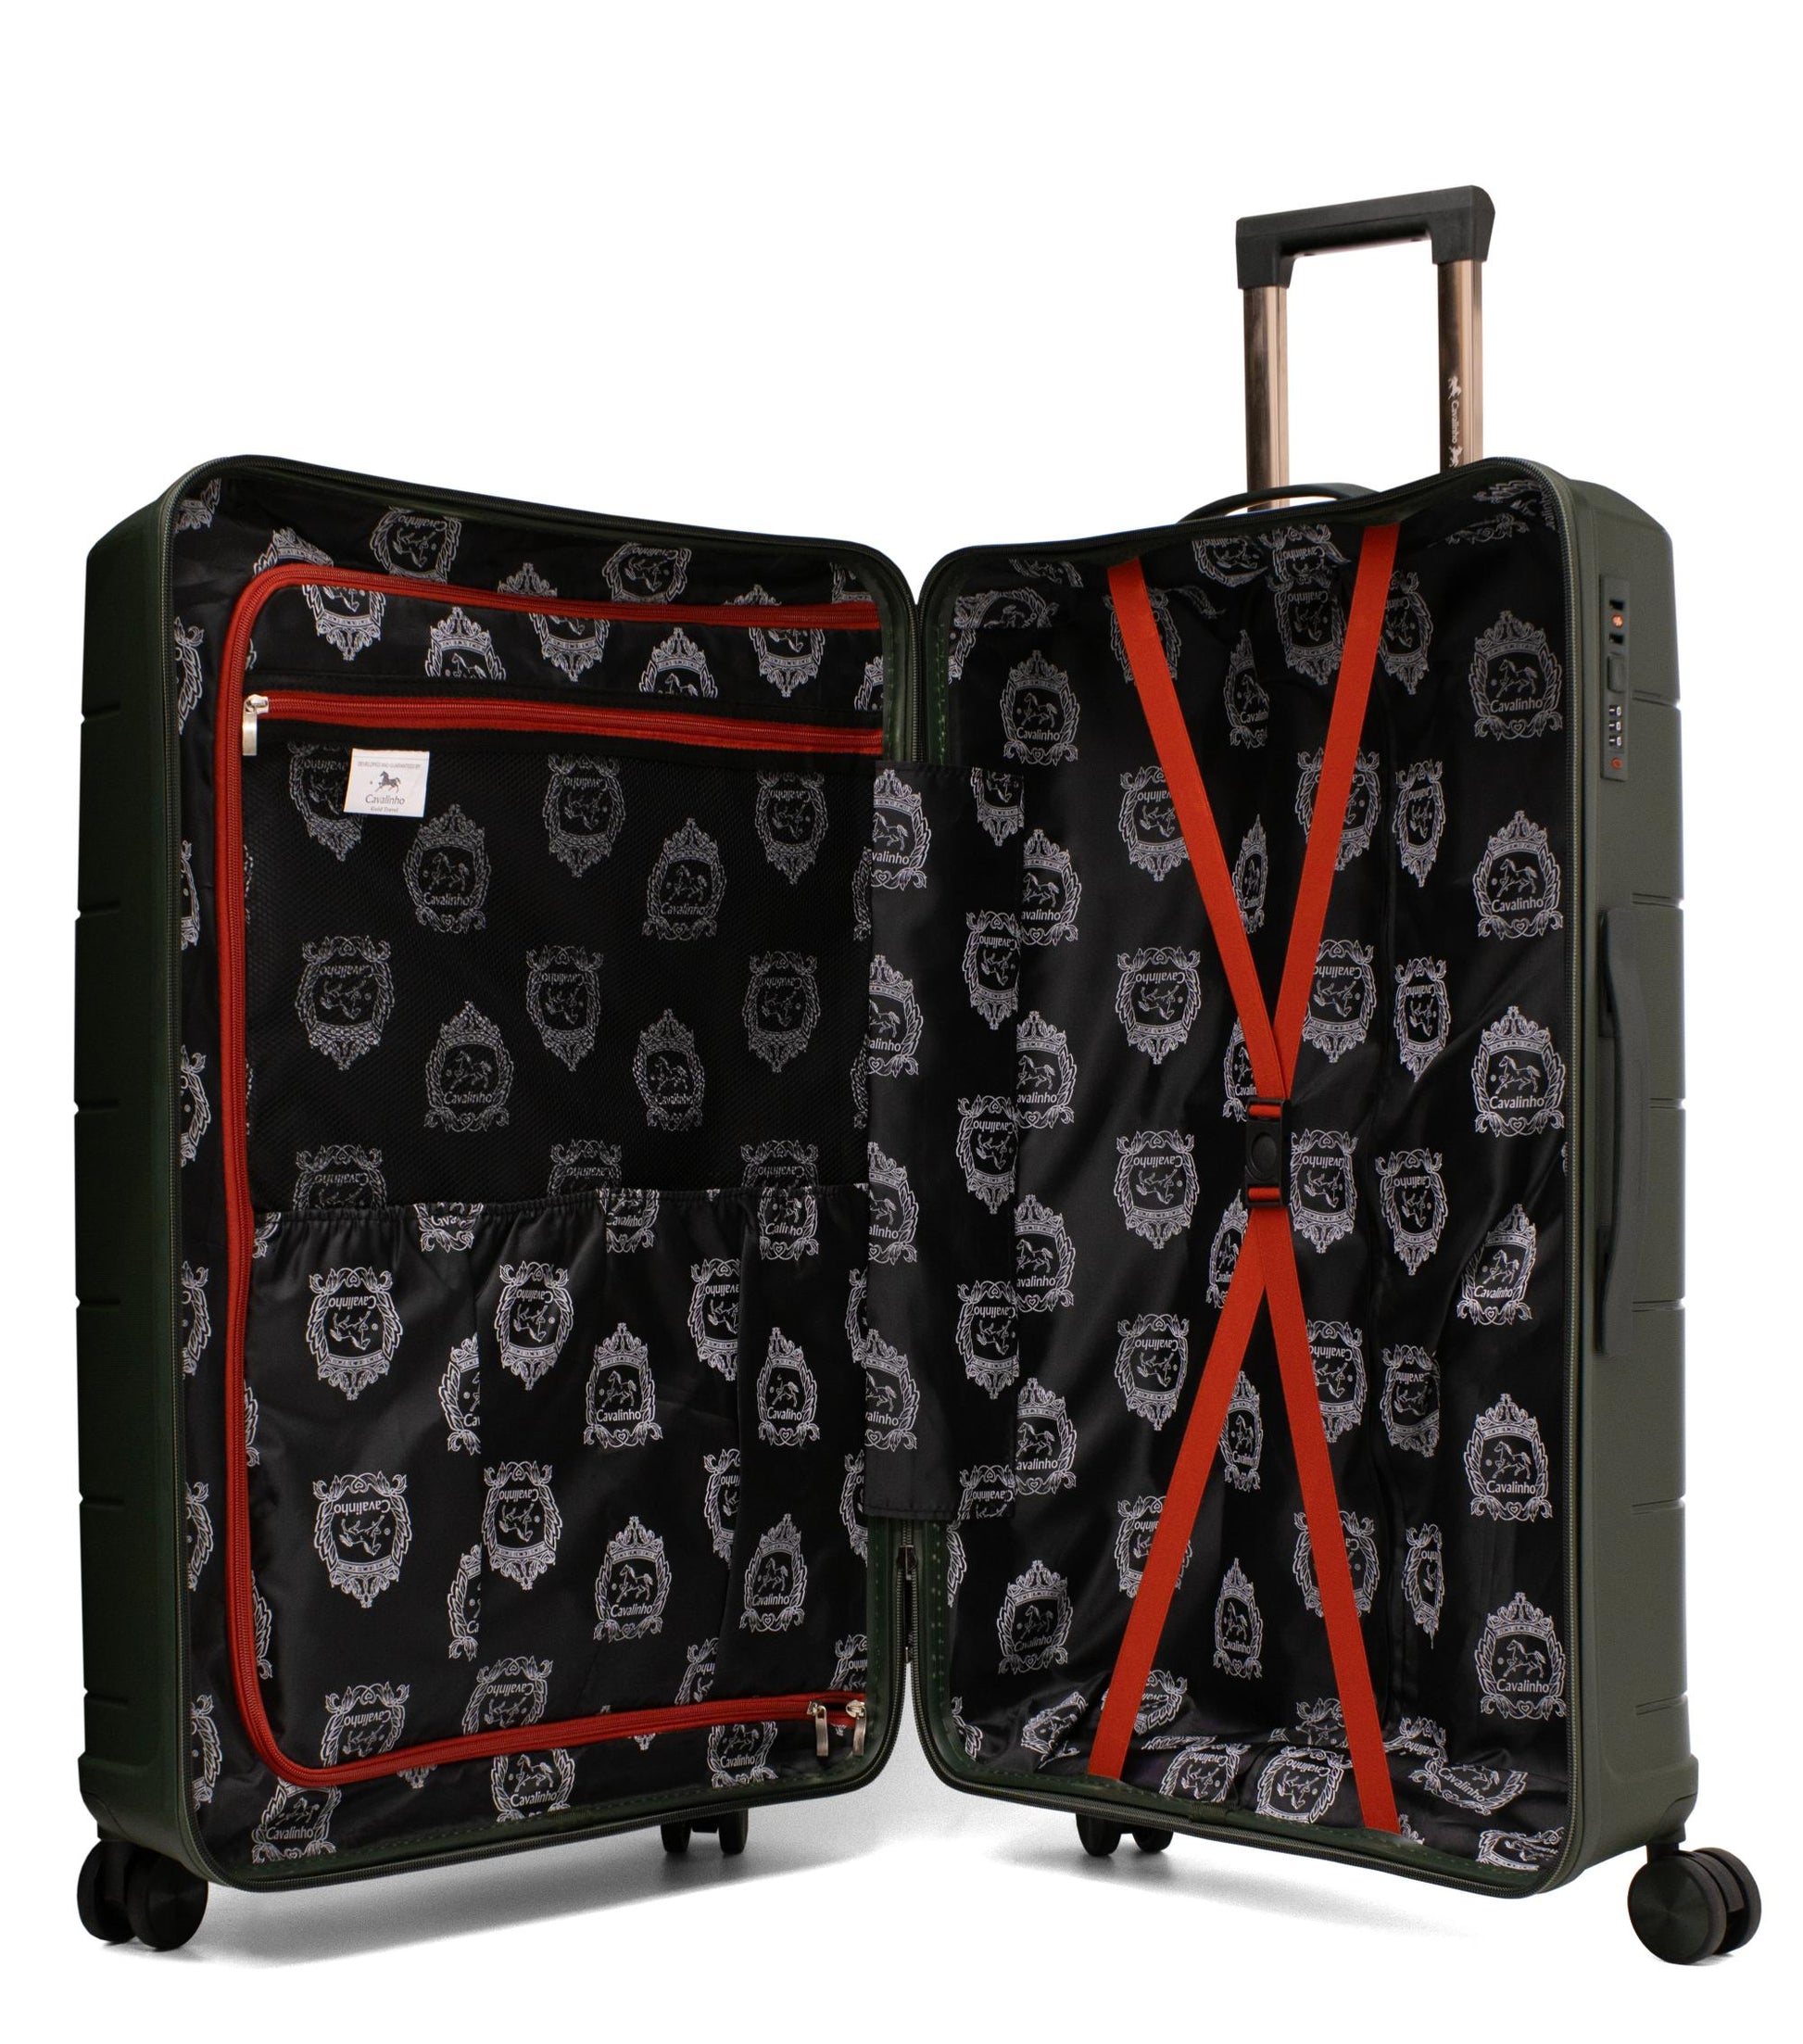 Cavalinho Oasis Check-in Hardside Luggage (28") - 28 inch DarkOliveGreen - 68040001.09.28_4